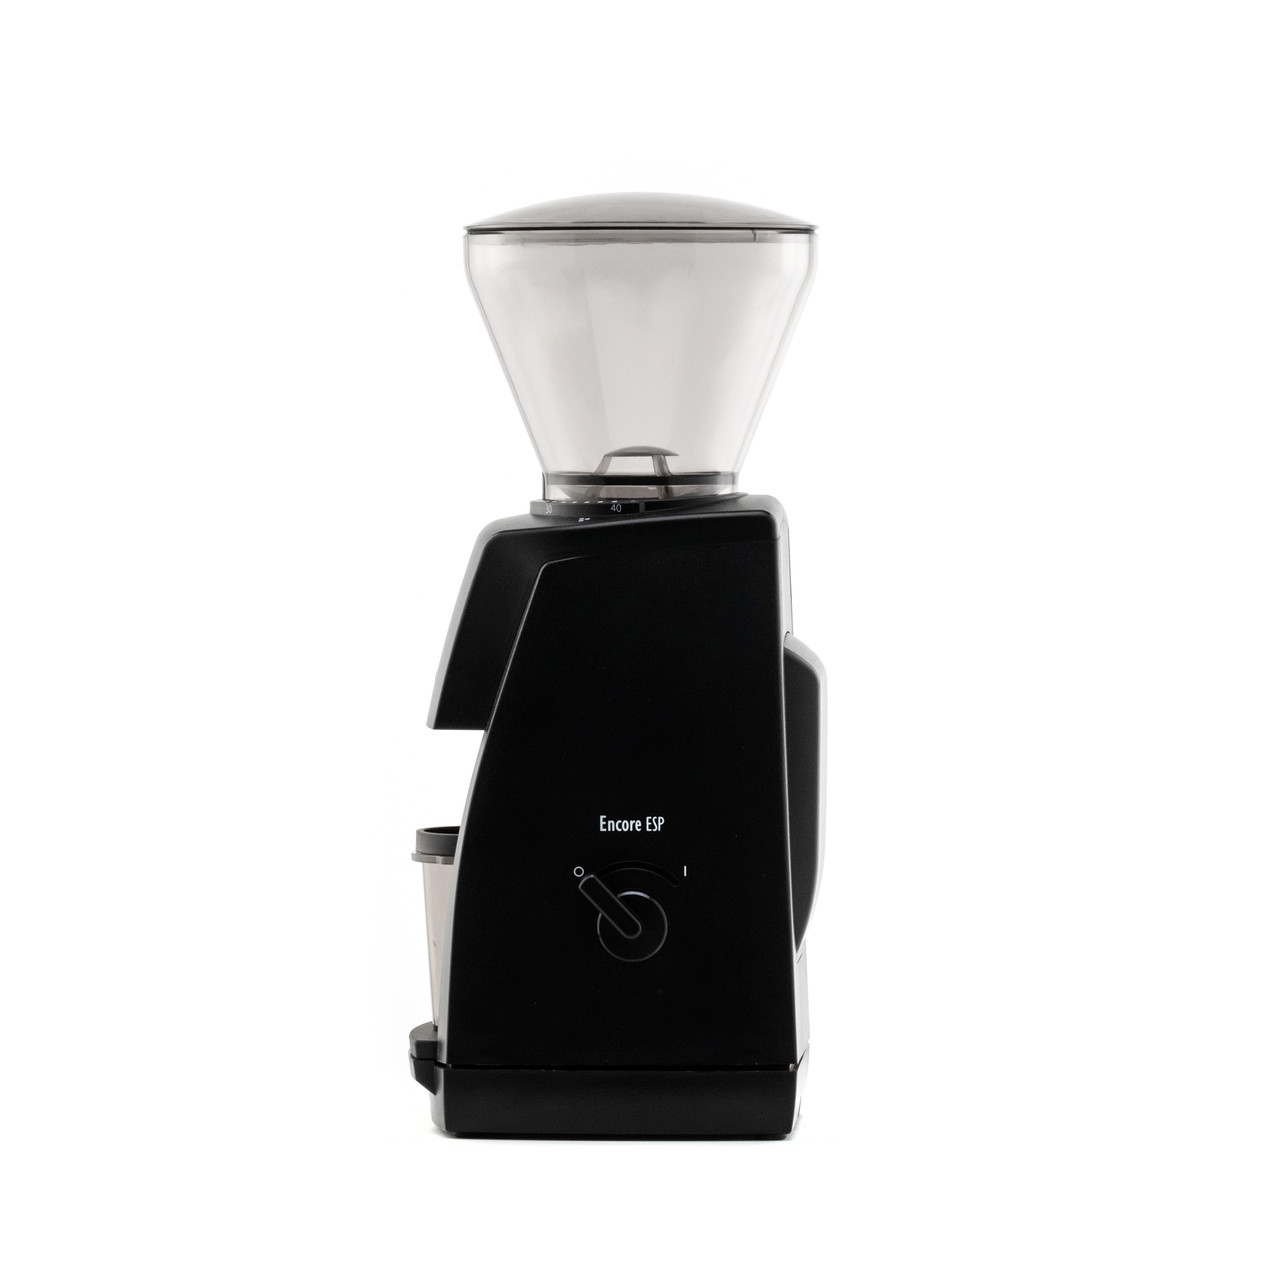 Review: Baratza Encore ESP Coffee Grinder